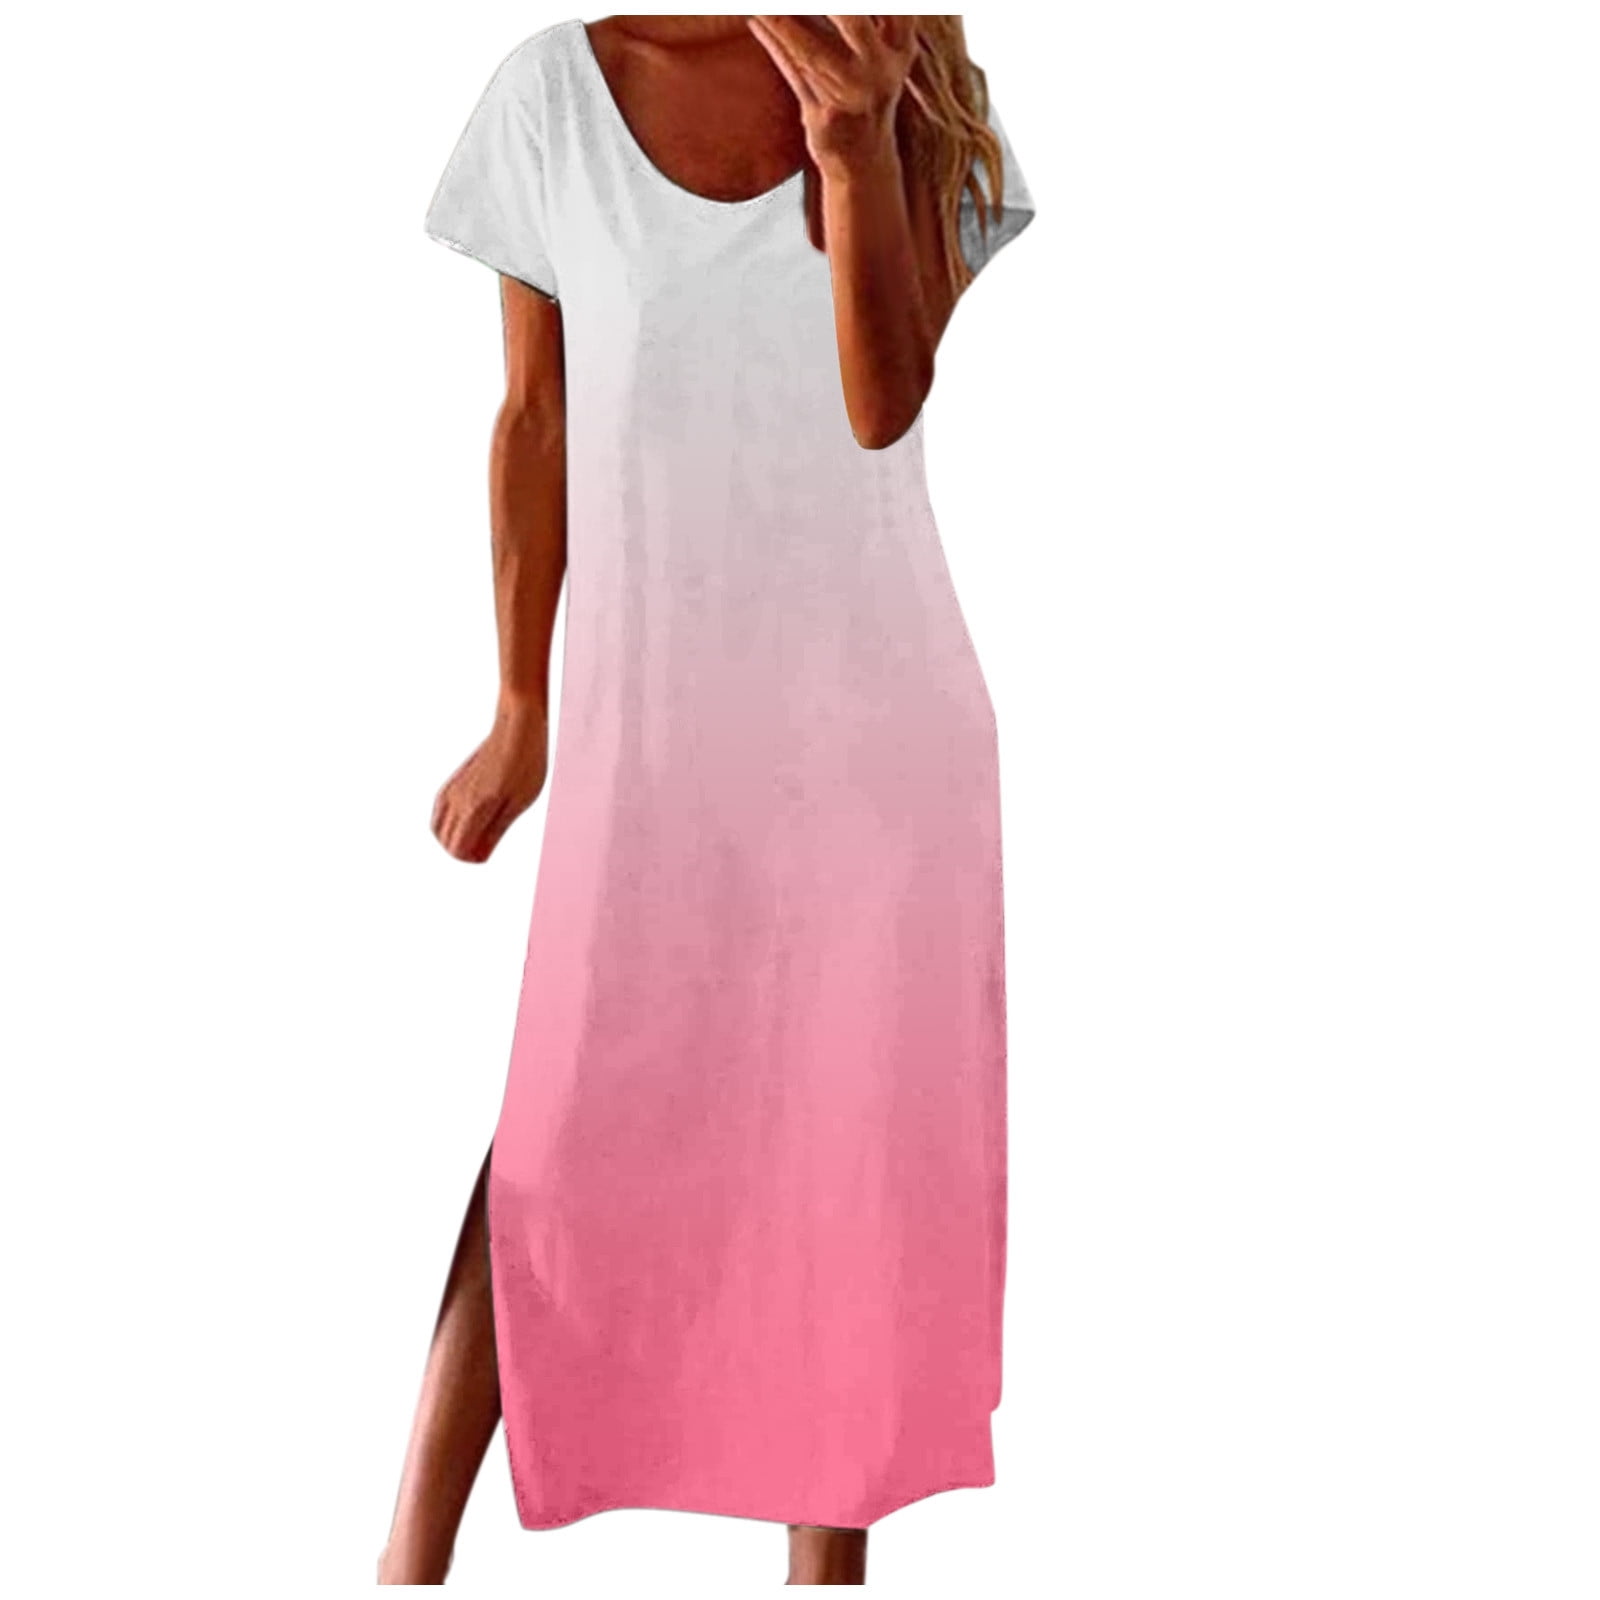 Larisalt Dresses With Sleeves,Women's Plus Size 50s Vintage Ruffle Peplum  Cocktail Pencil Knee Dress Pink,M - Walmart.com